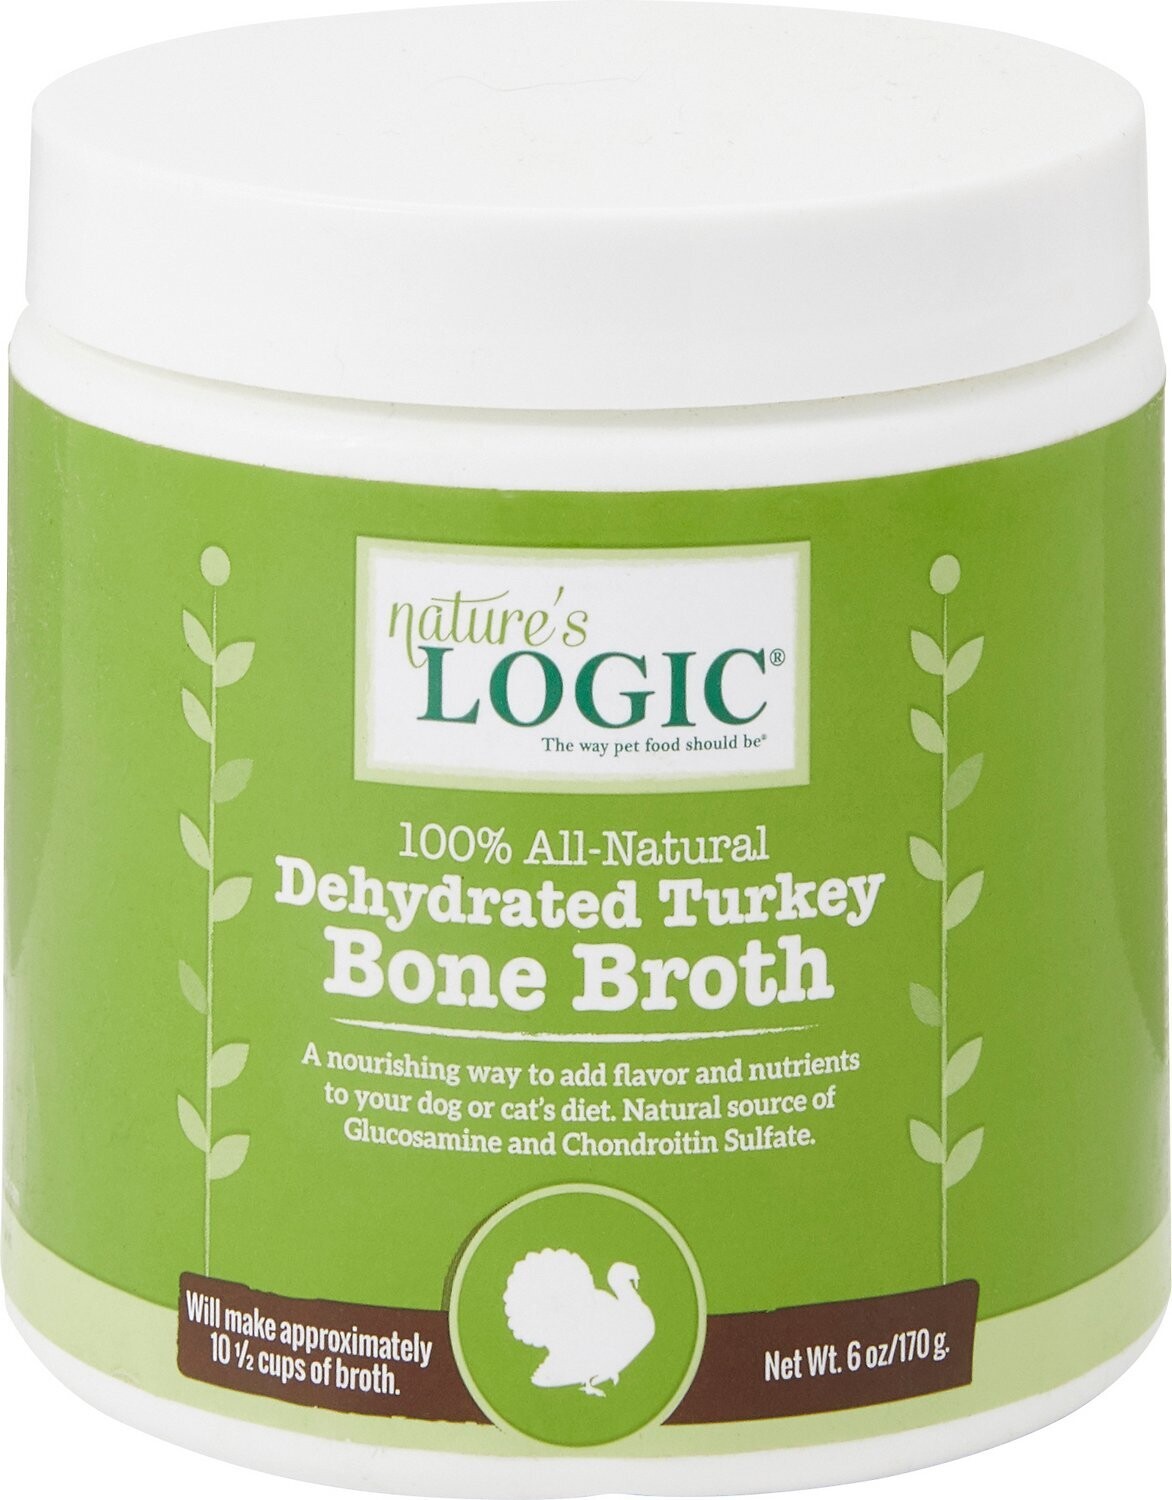 Nature's Logic Dehydrated Turkey Bone Broth 6oz